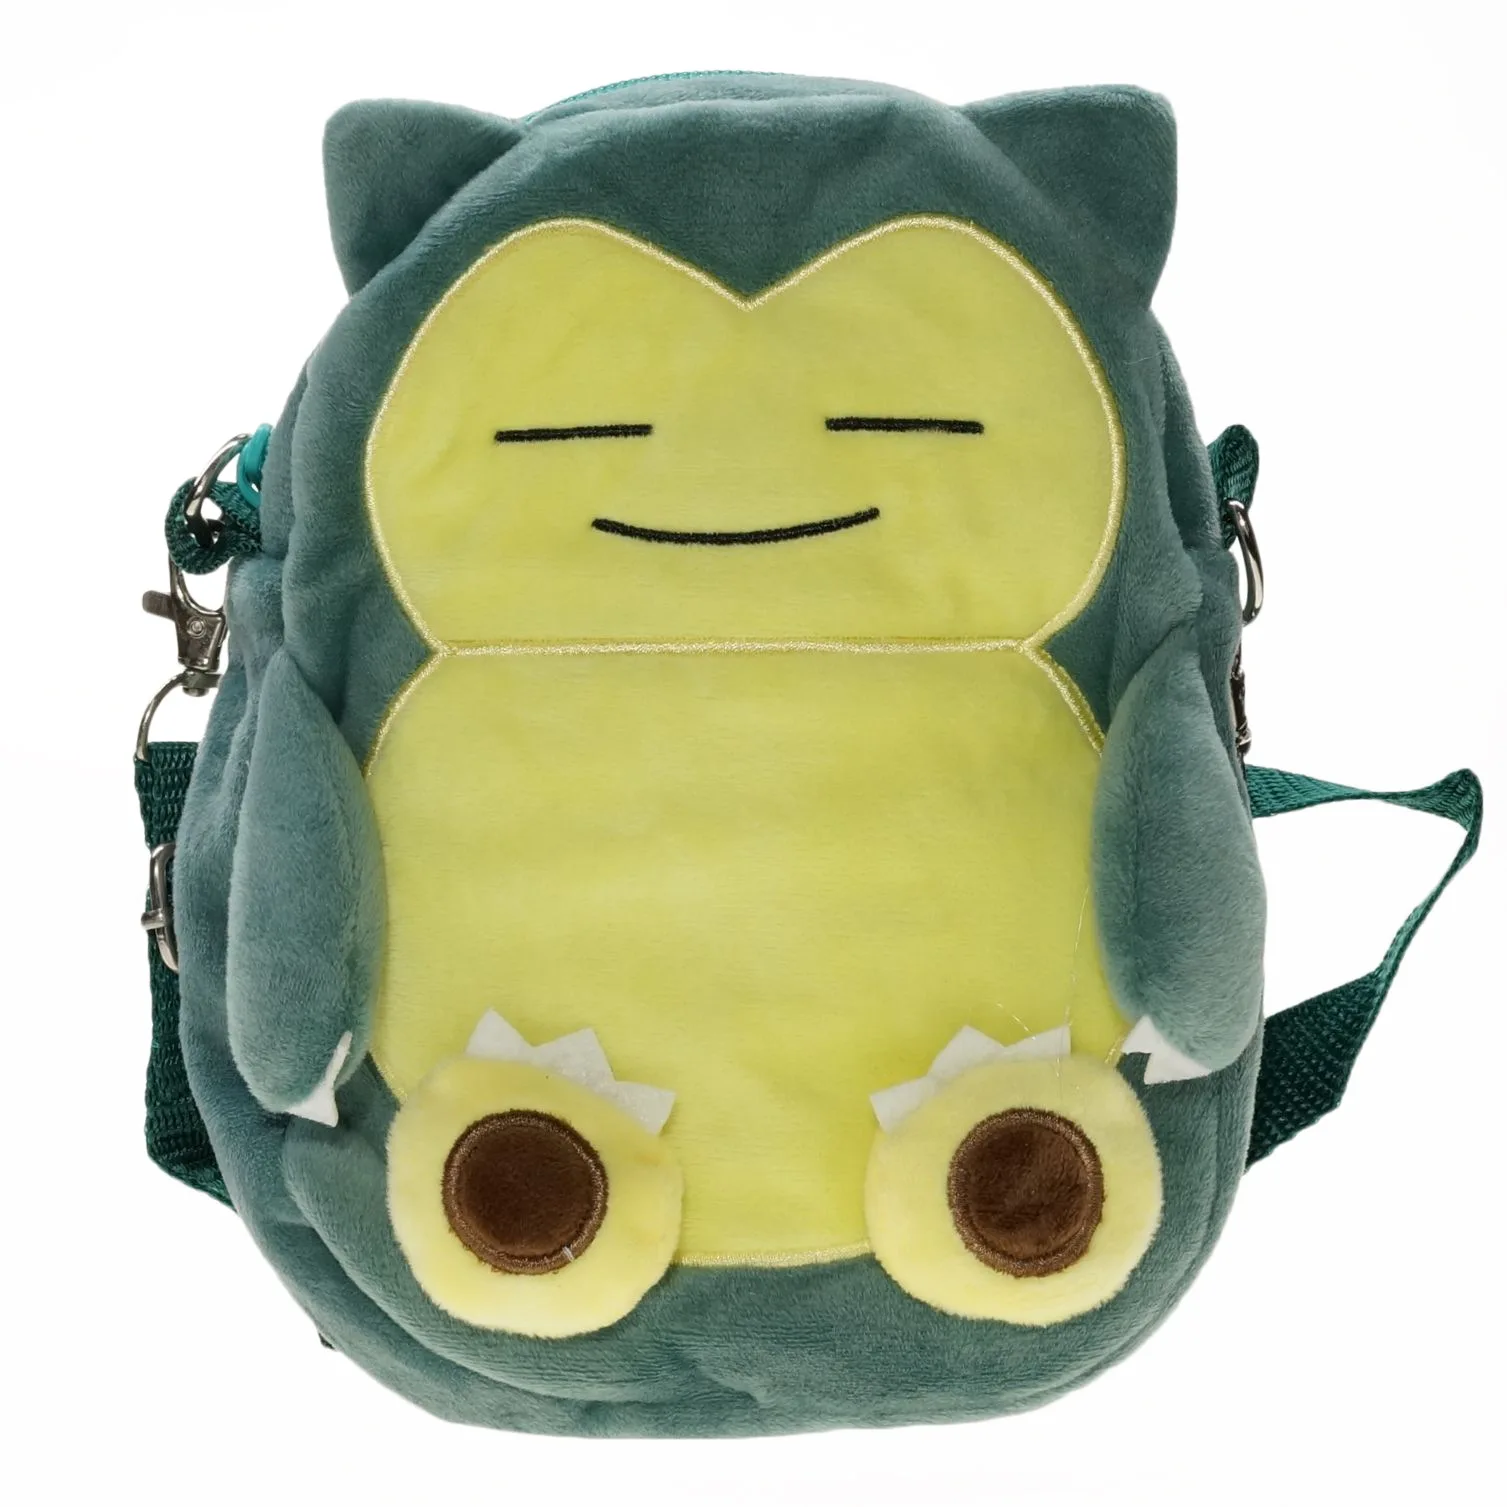 New Poke plush Doll backpack, Pokeball cotton plush Snolox back bag, Anime cartoon toy plush backpack